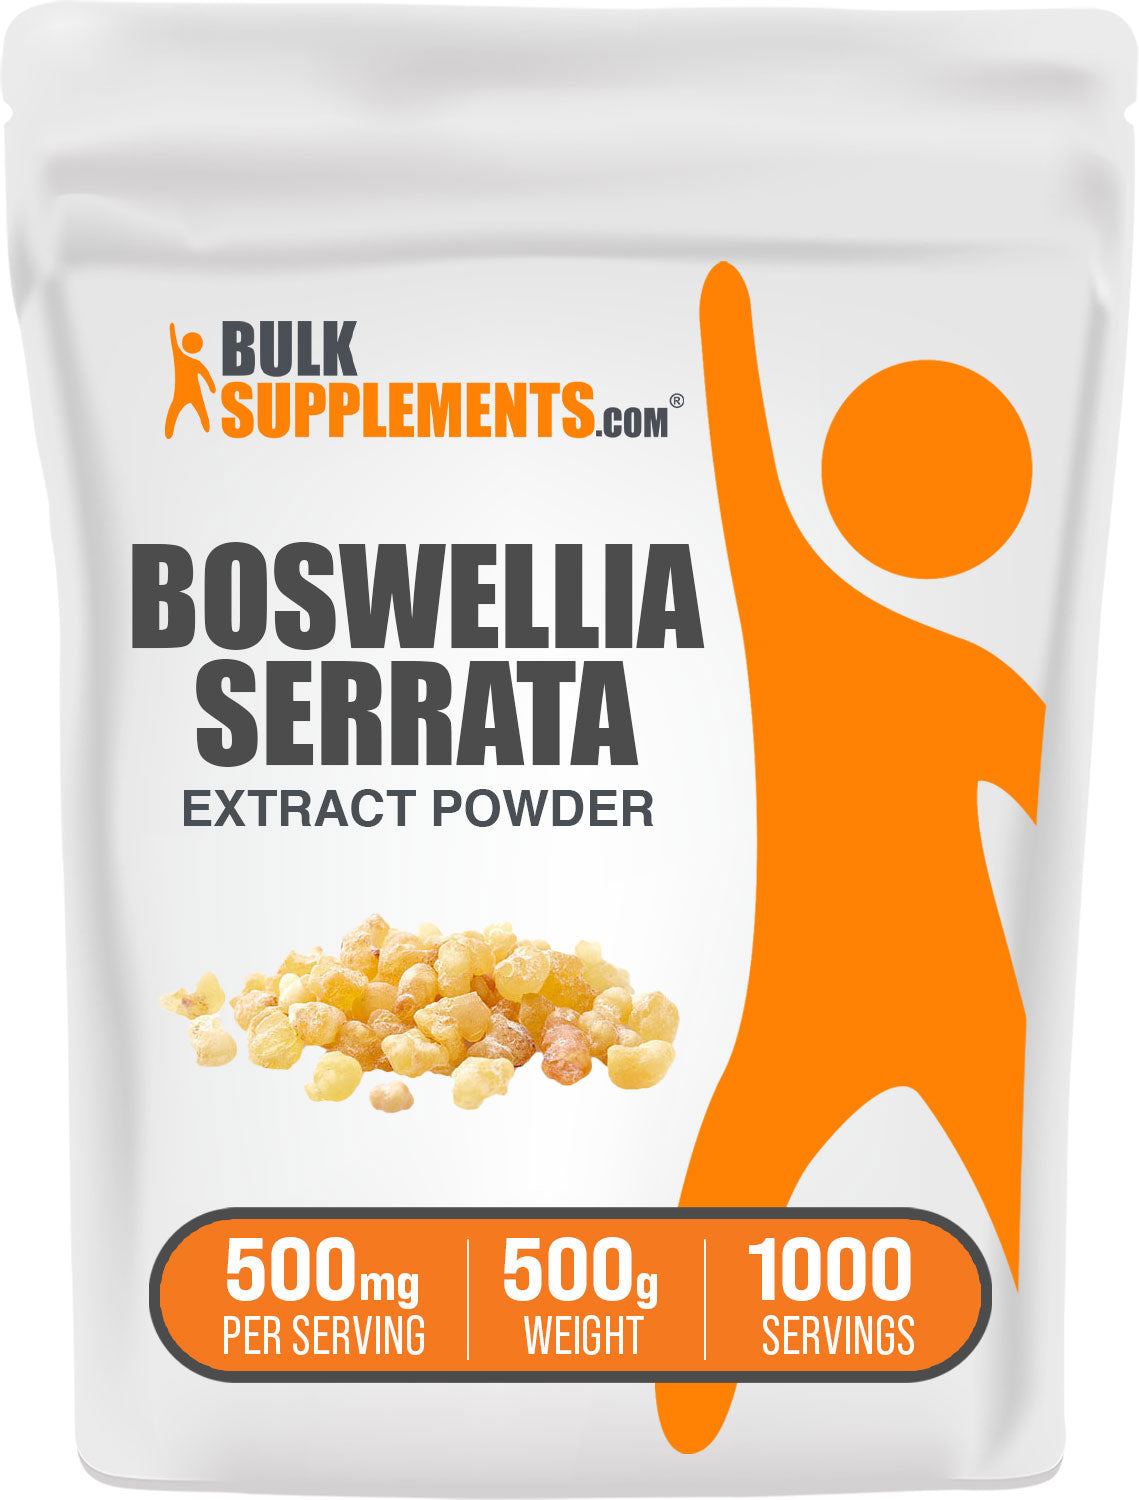 Boswellia Serrata Extract Powder 500g Bag